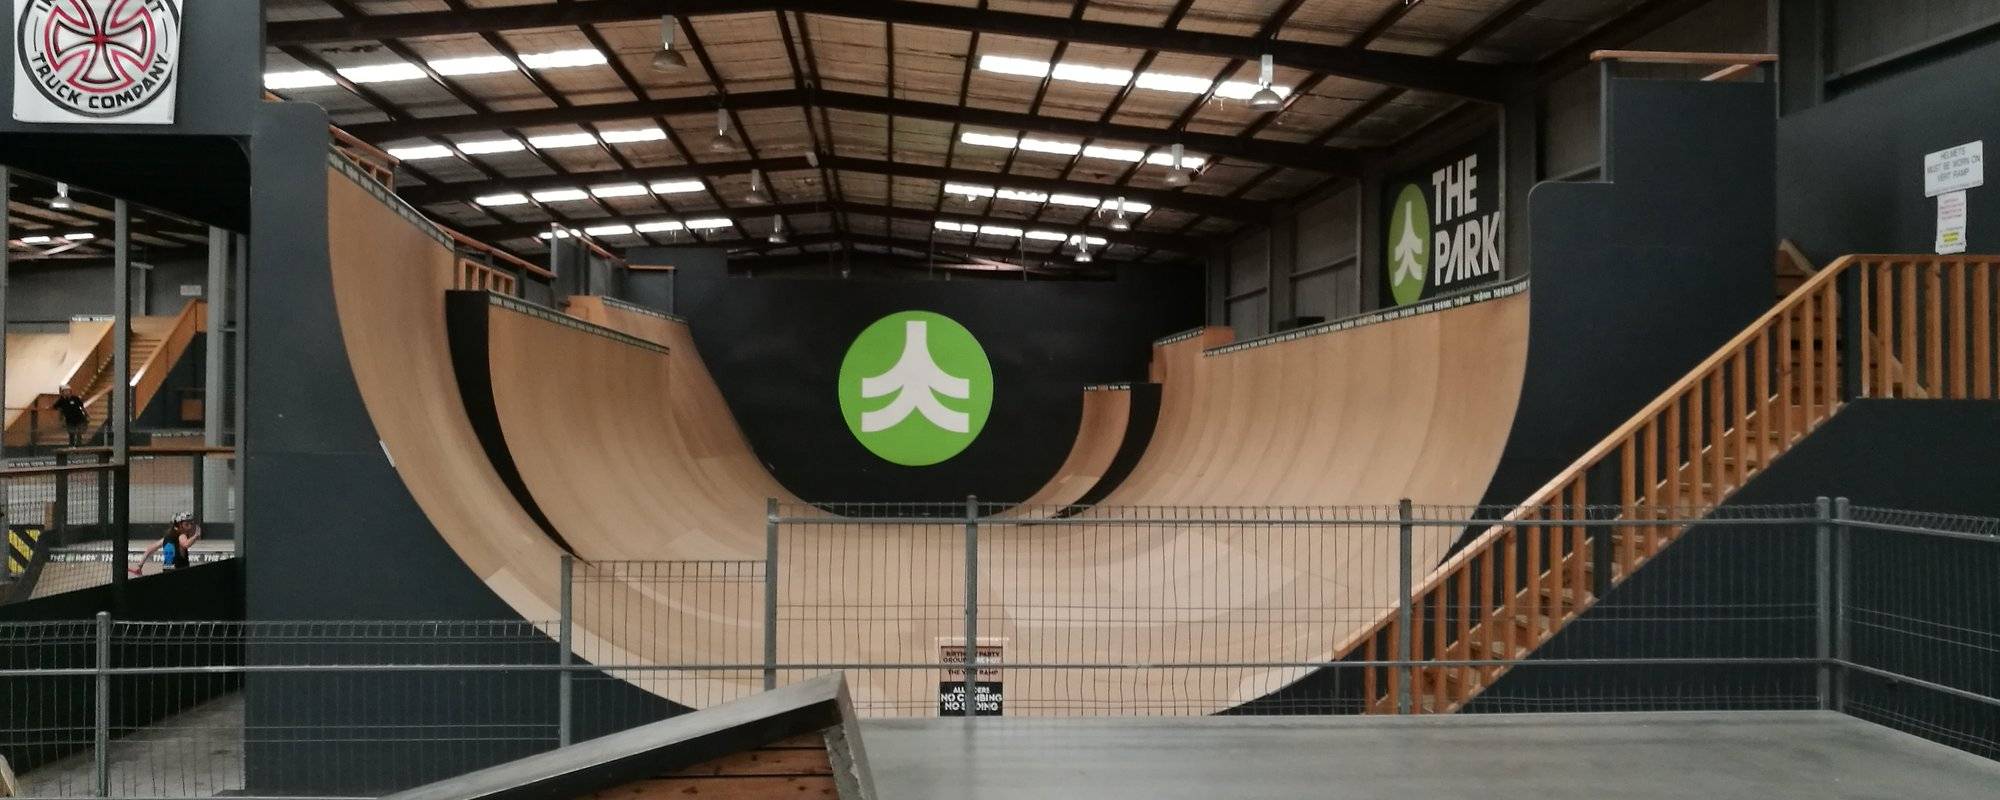 The Park - Indoor skatepark Geelong Australia